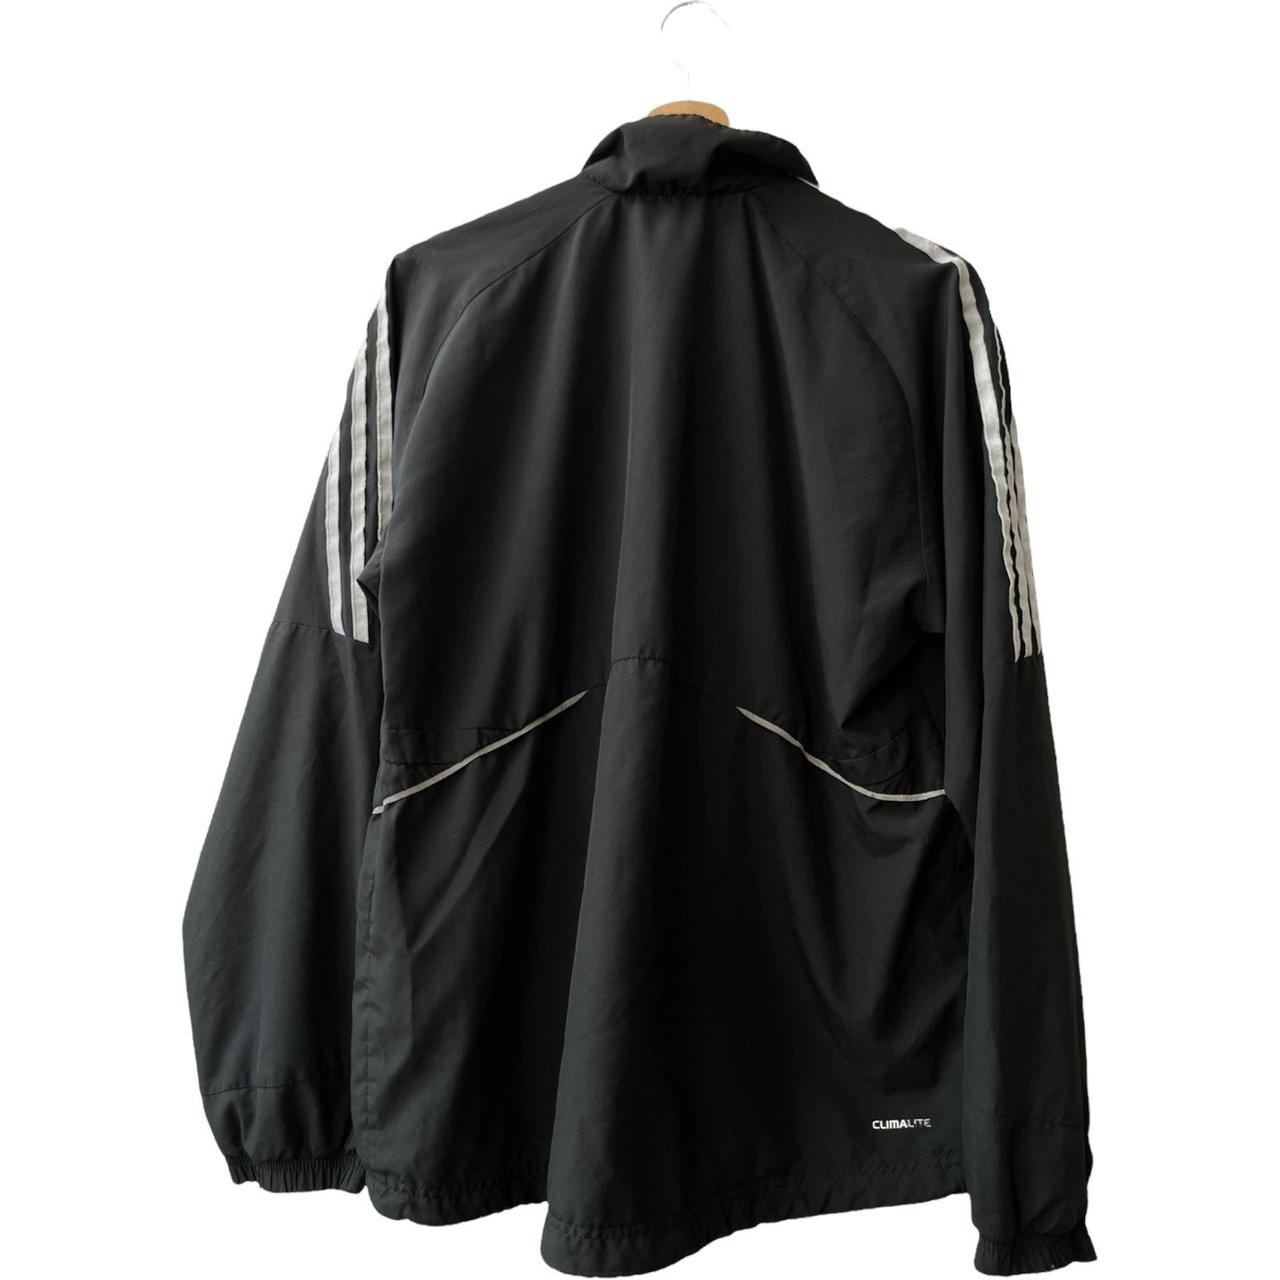 Adidas Climalite Black Full Zip Training Jacket - Depop